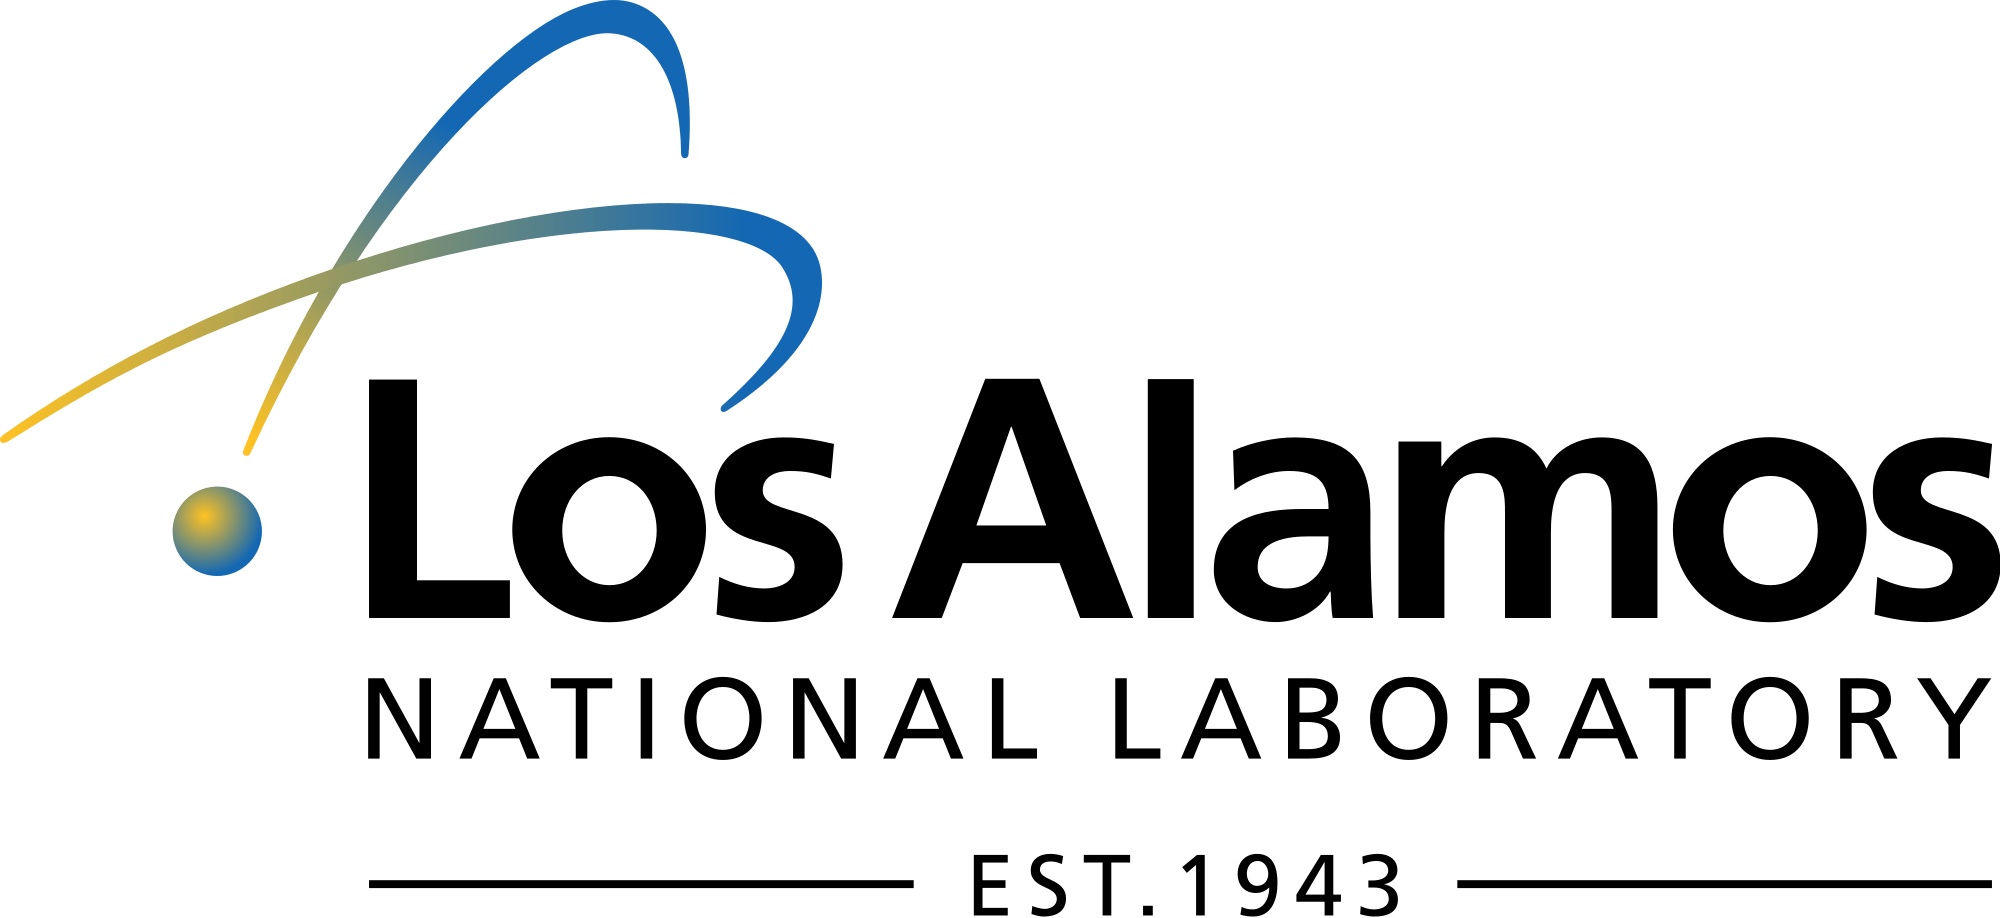 LANL Logo - Los Alamos logo.svg